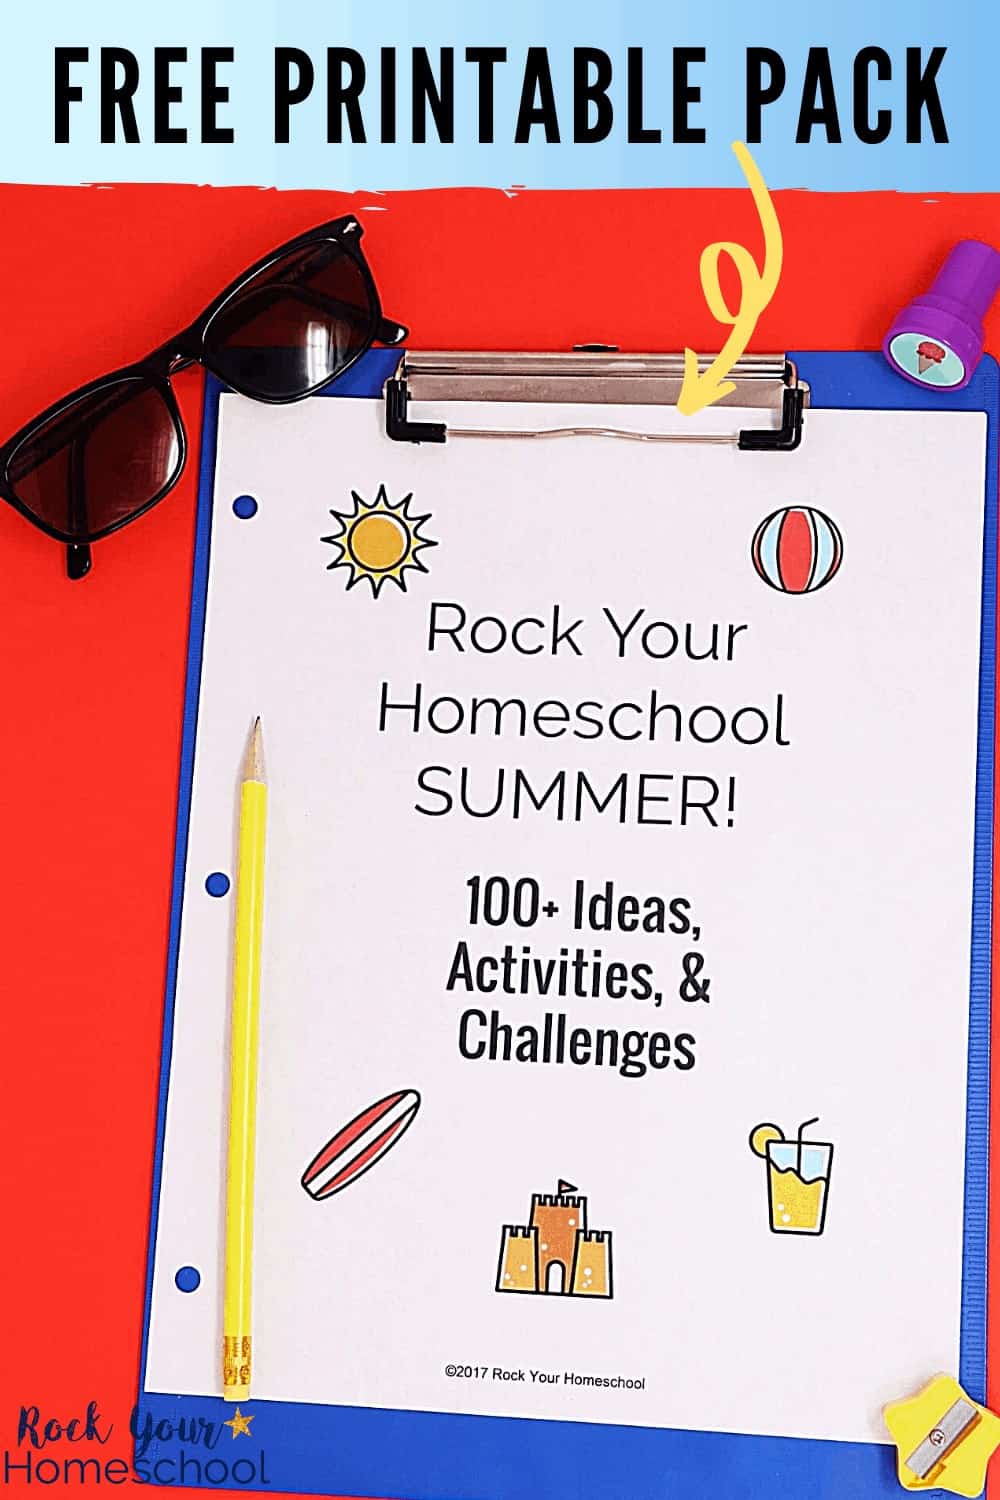 FREE Rock Your Homeschool Summer Pack With 100+ Activities